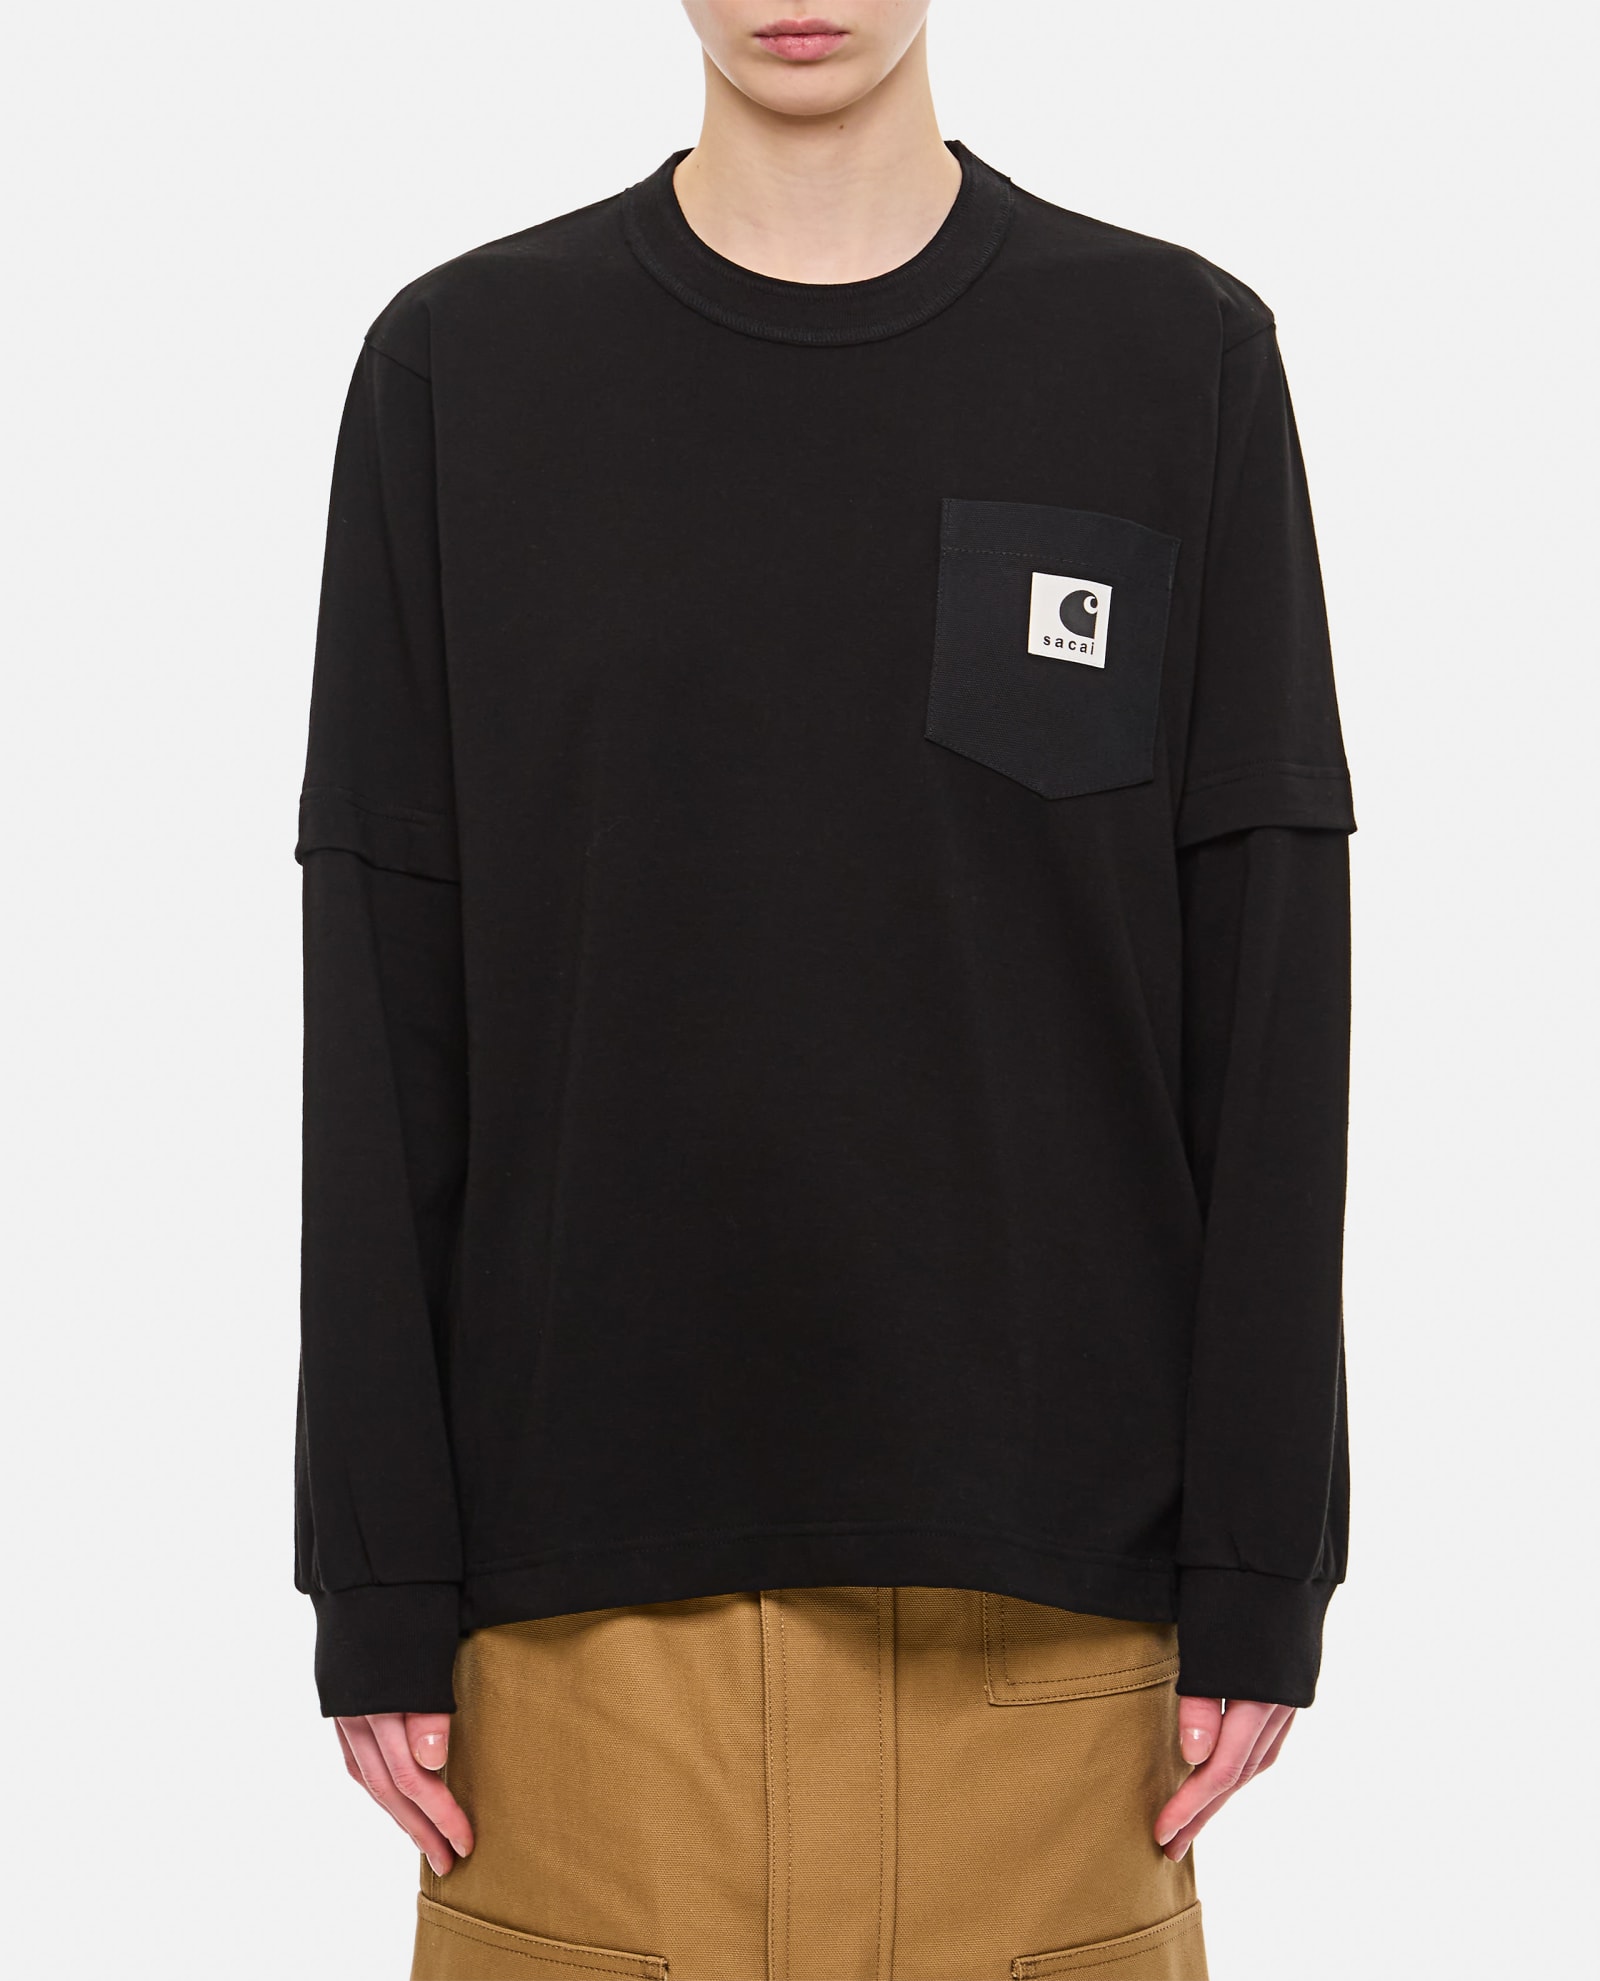 Sacai X Carhartt Wip L/s Cotton T-shirt In Black